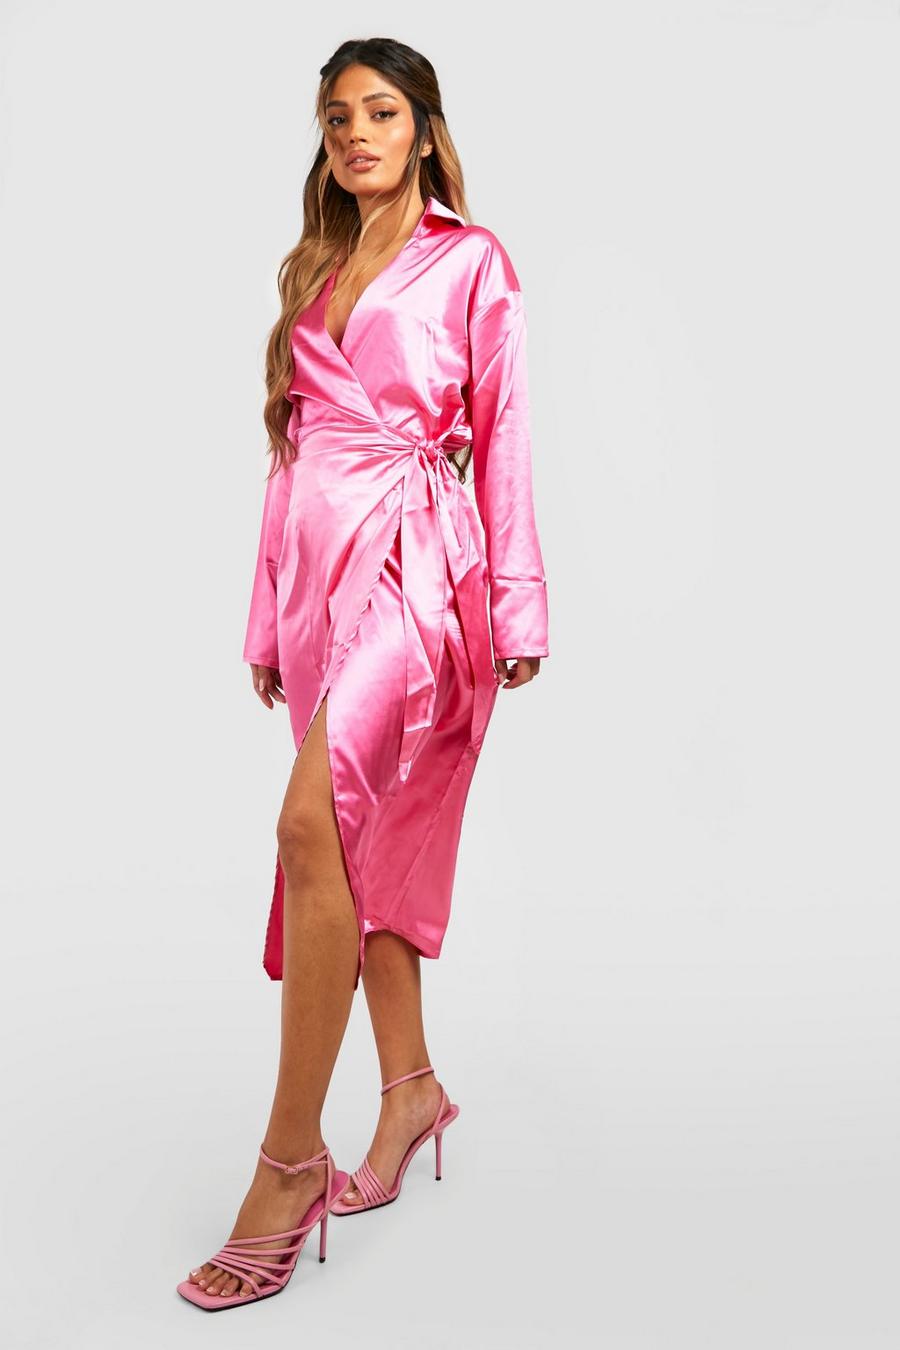 Wickel-Hemdkleid aus Satin, Hot pink